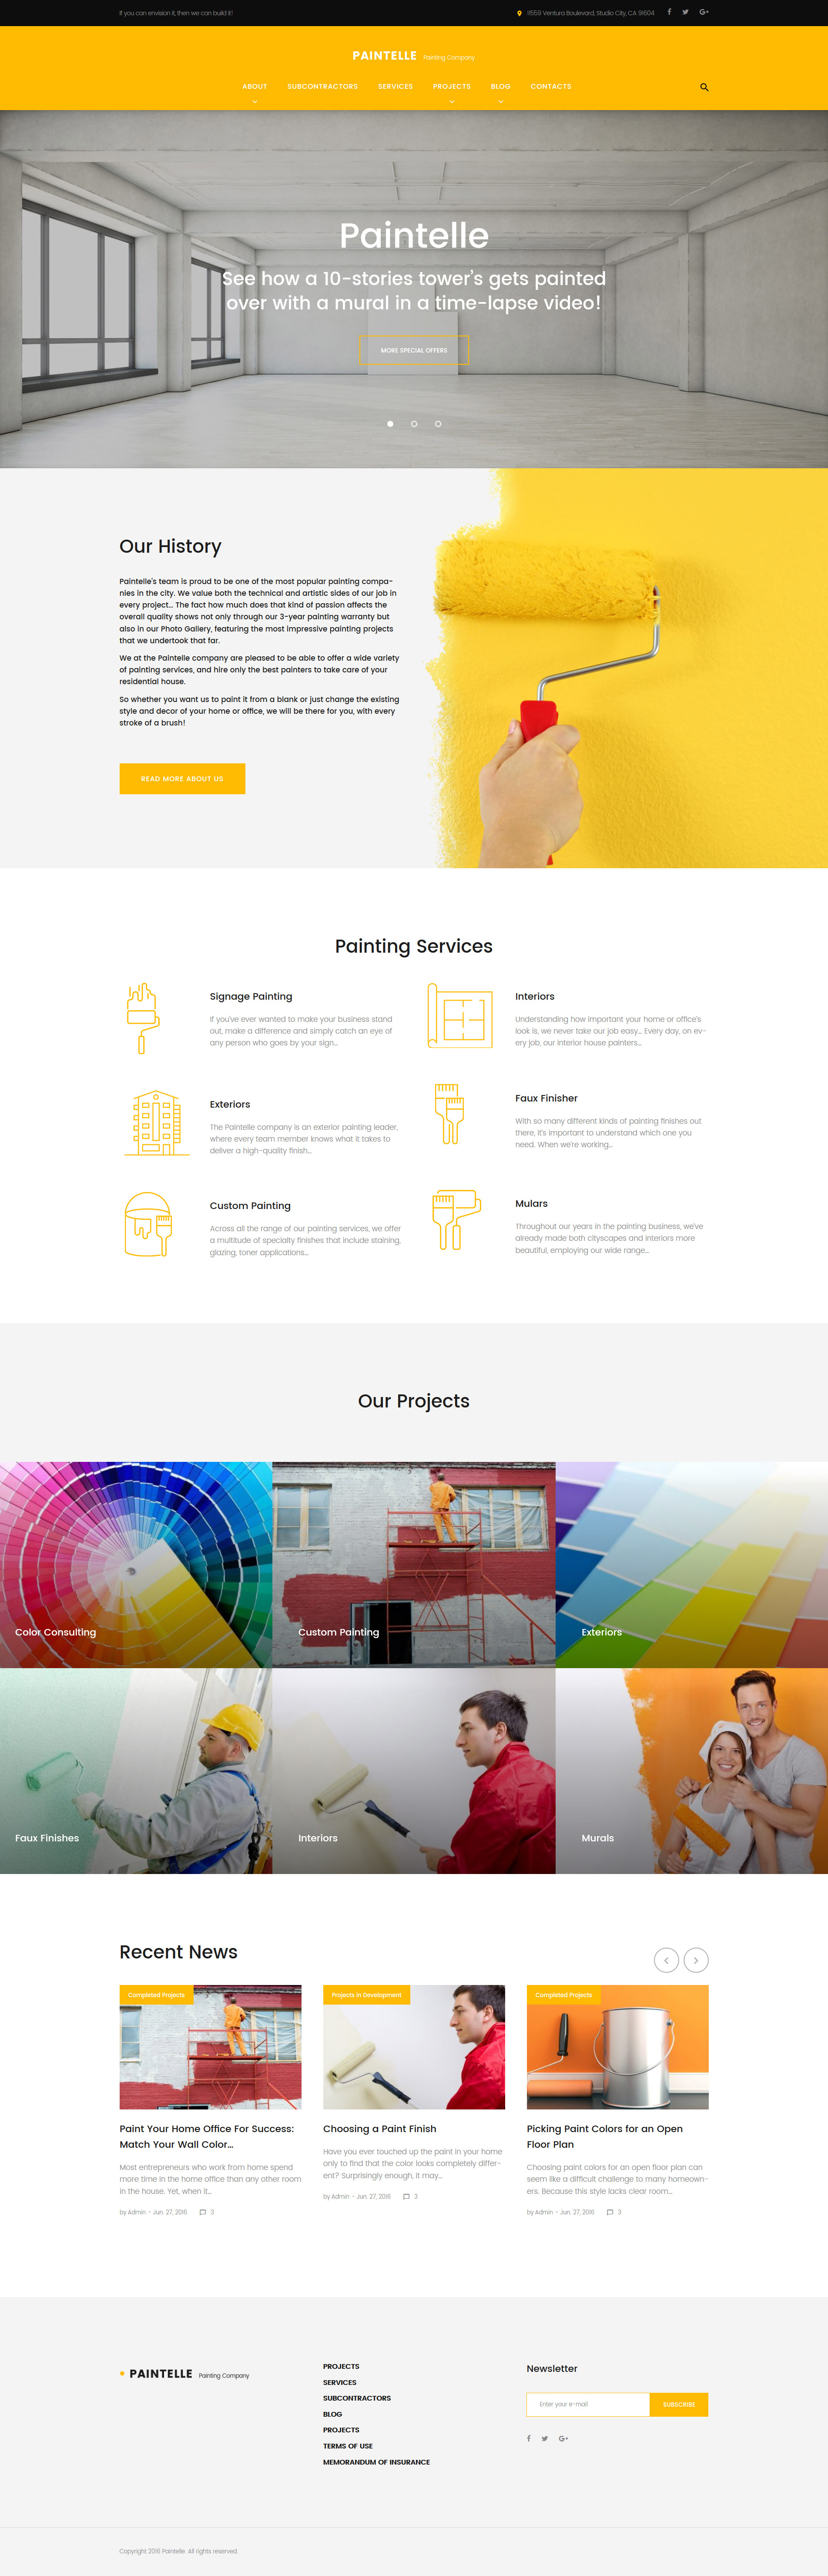 Paintelle - Painting Company WordPress Theme New Screenshots BIG